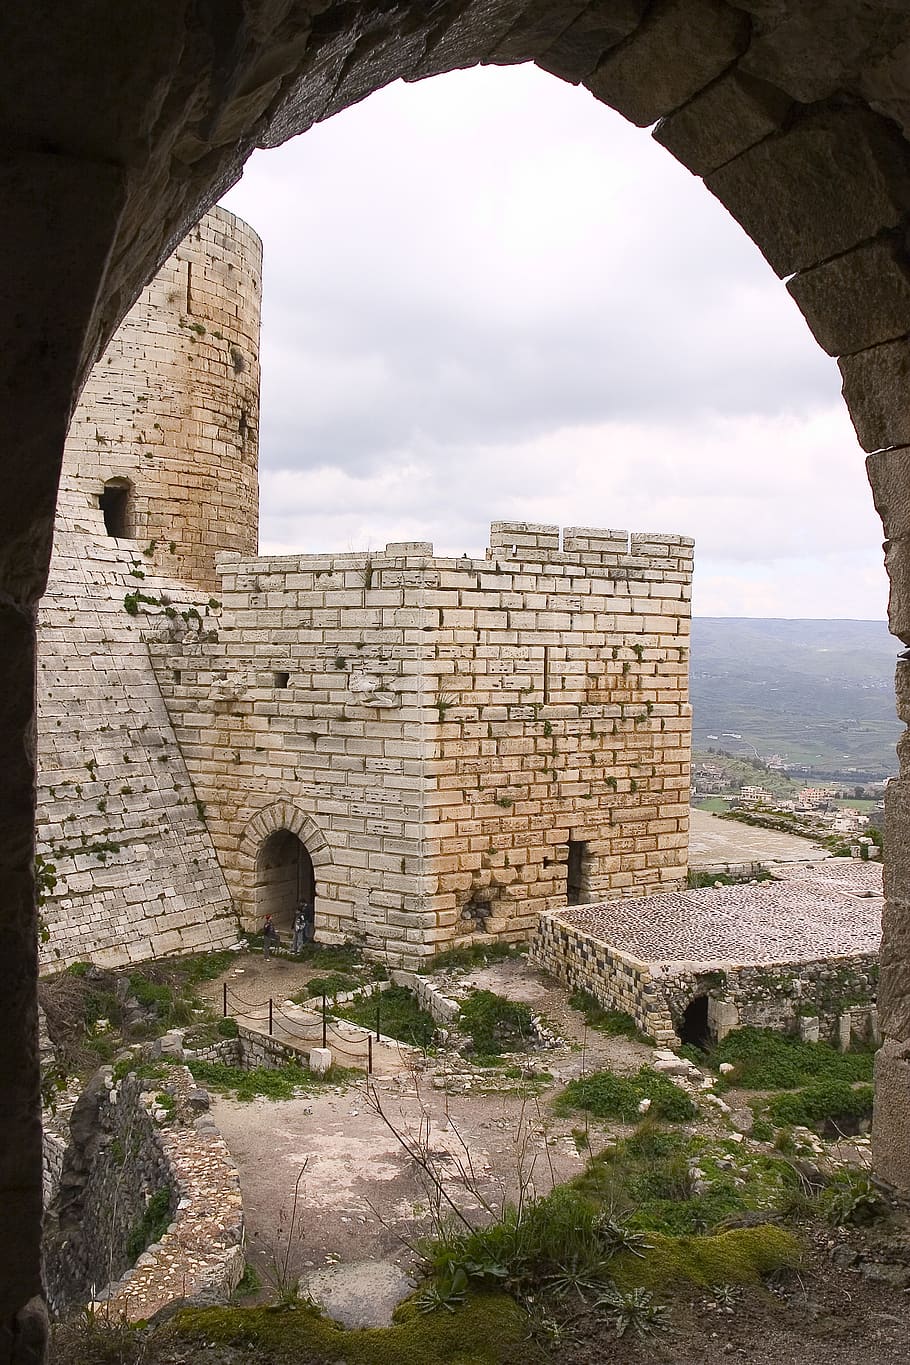 Suriah, crac des chevaliers, altheimat, kastil tentara salib, unesco, kastil abad pertengahan, kastil kurdi, Arsitektur, sejarah, struktur yang dibangun